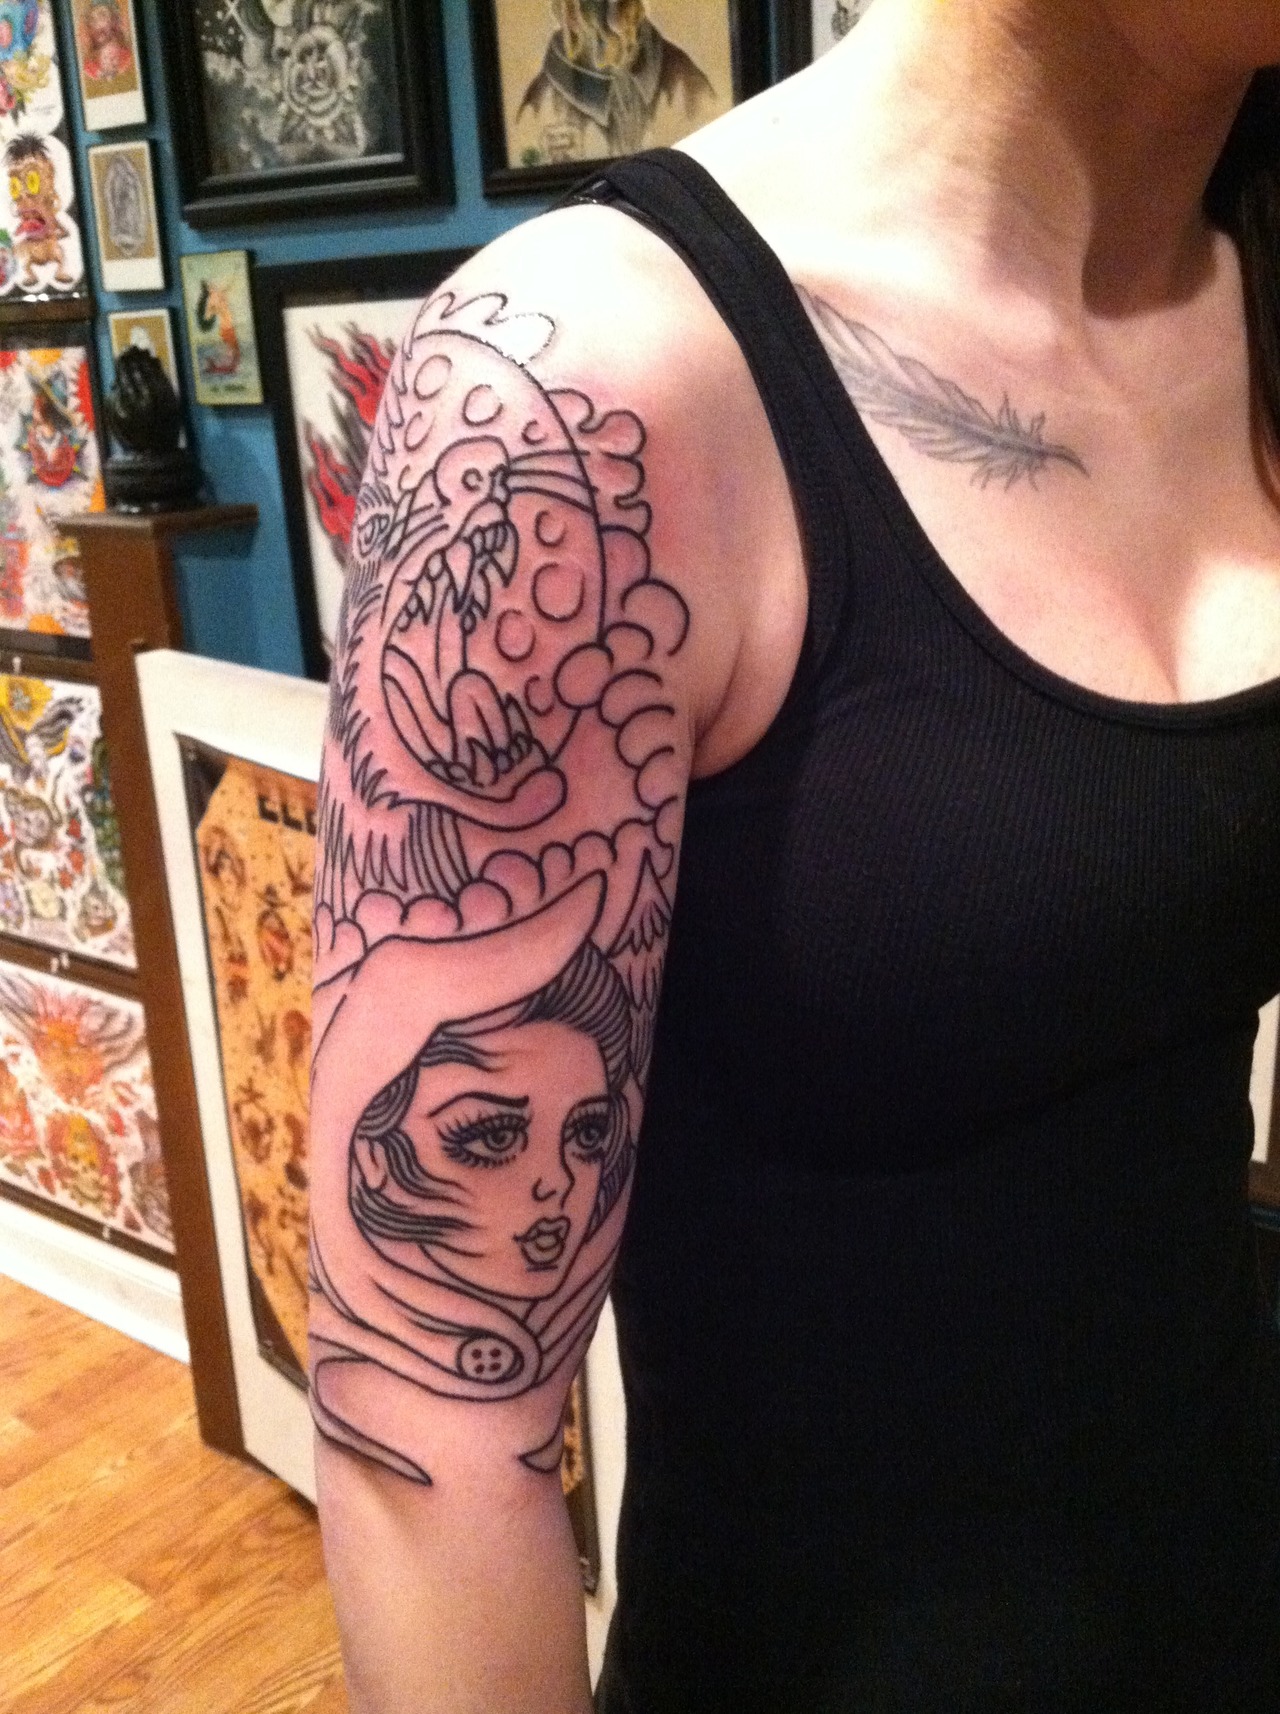 Girl's sleeve tattoo